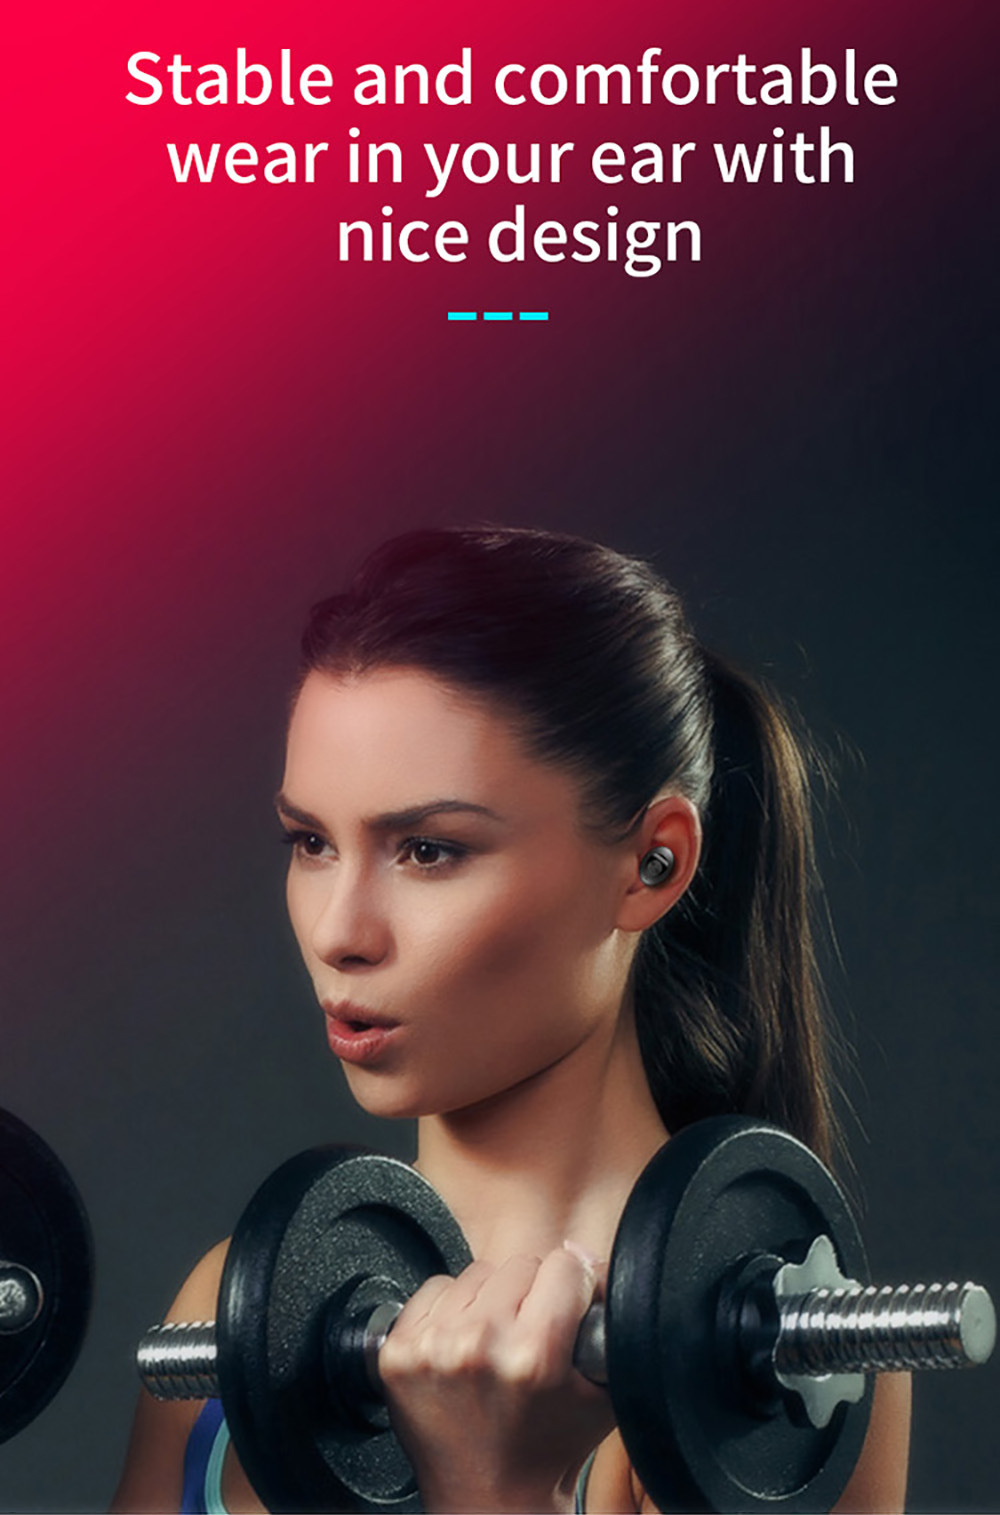 5D Stereo Tws Bluetooth 5.0 Earphone Stereo Wireless Earbus HiFi Sound Sport Earphones Handsfree Gaming Headset